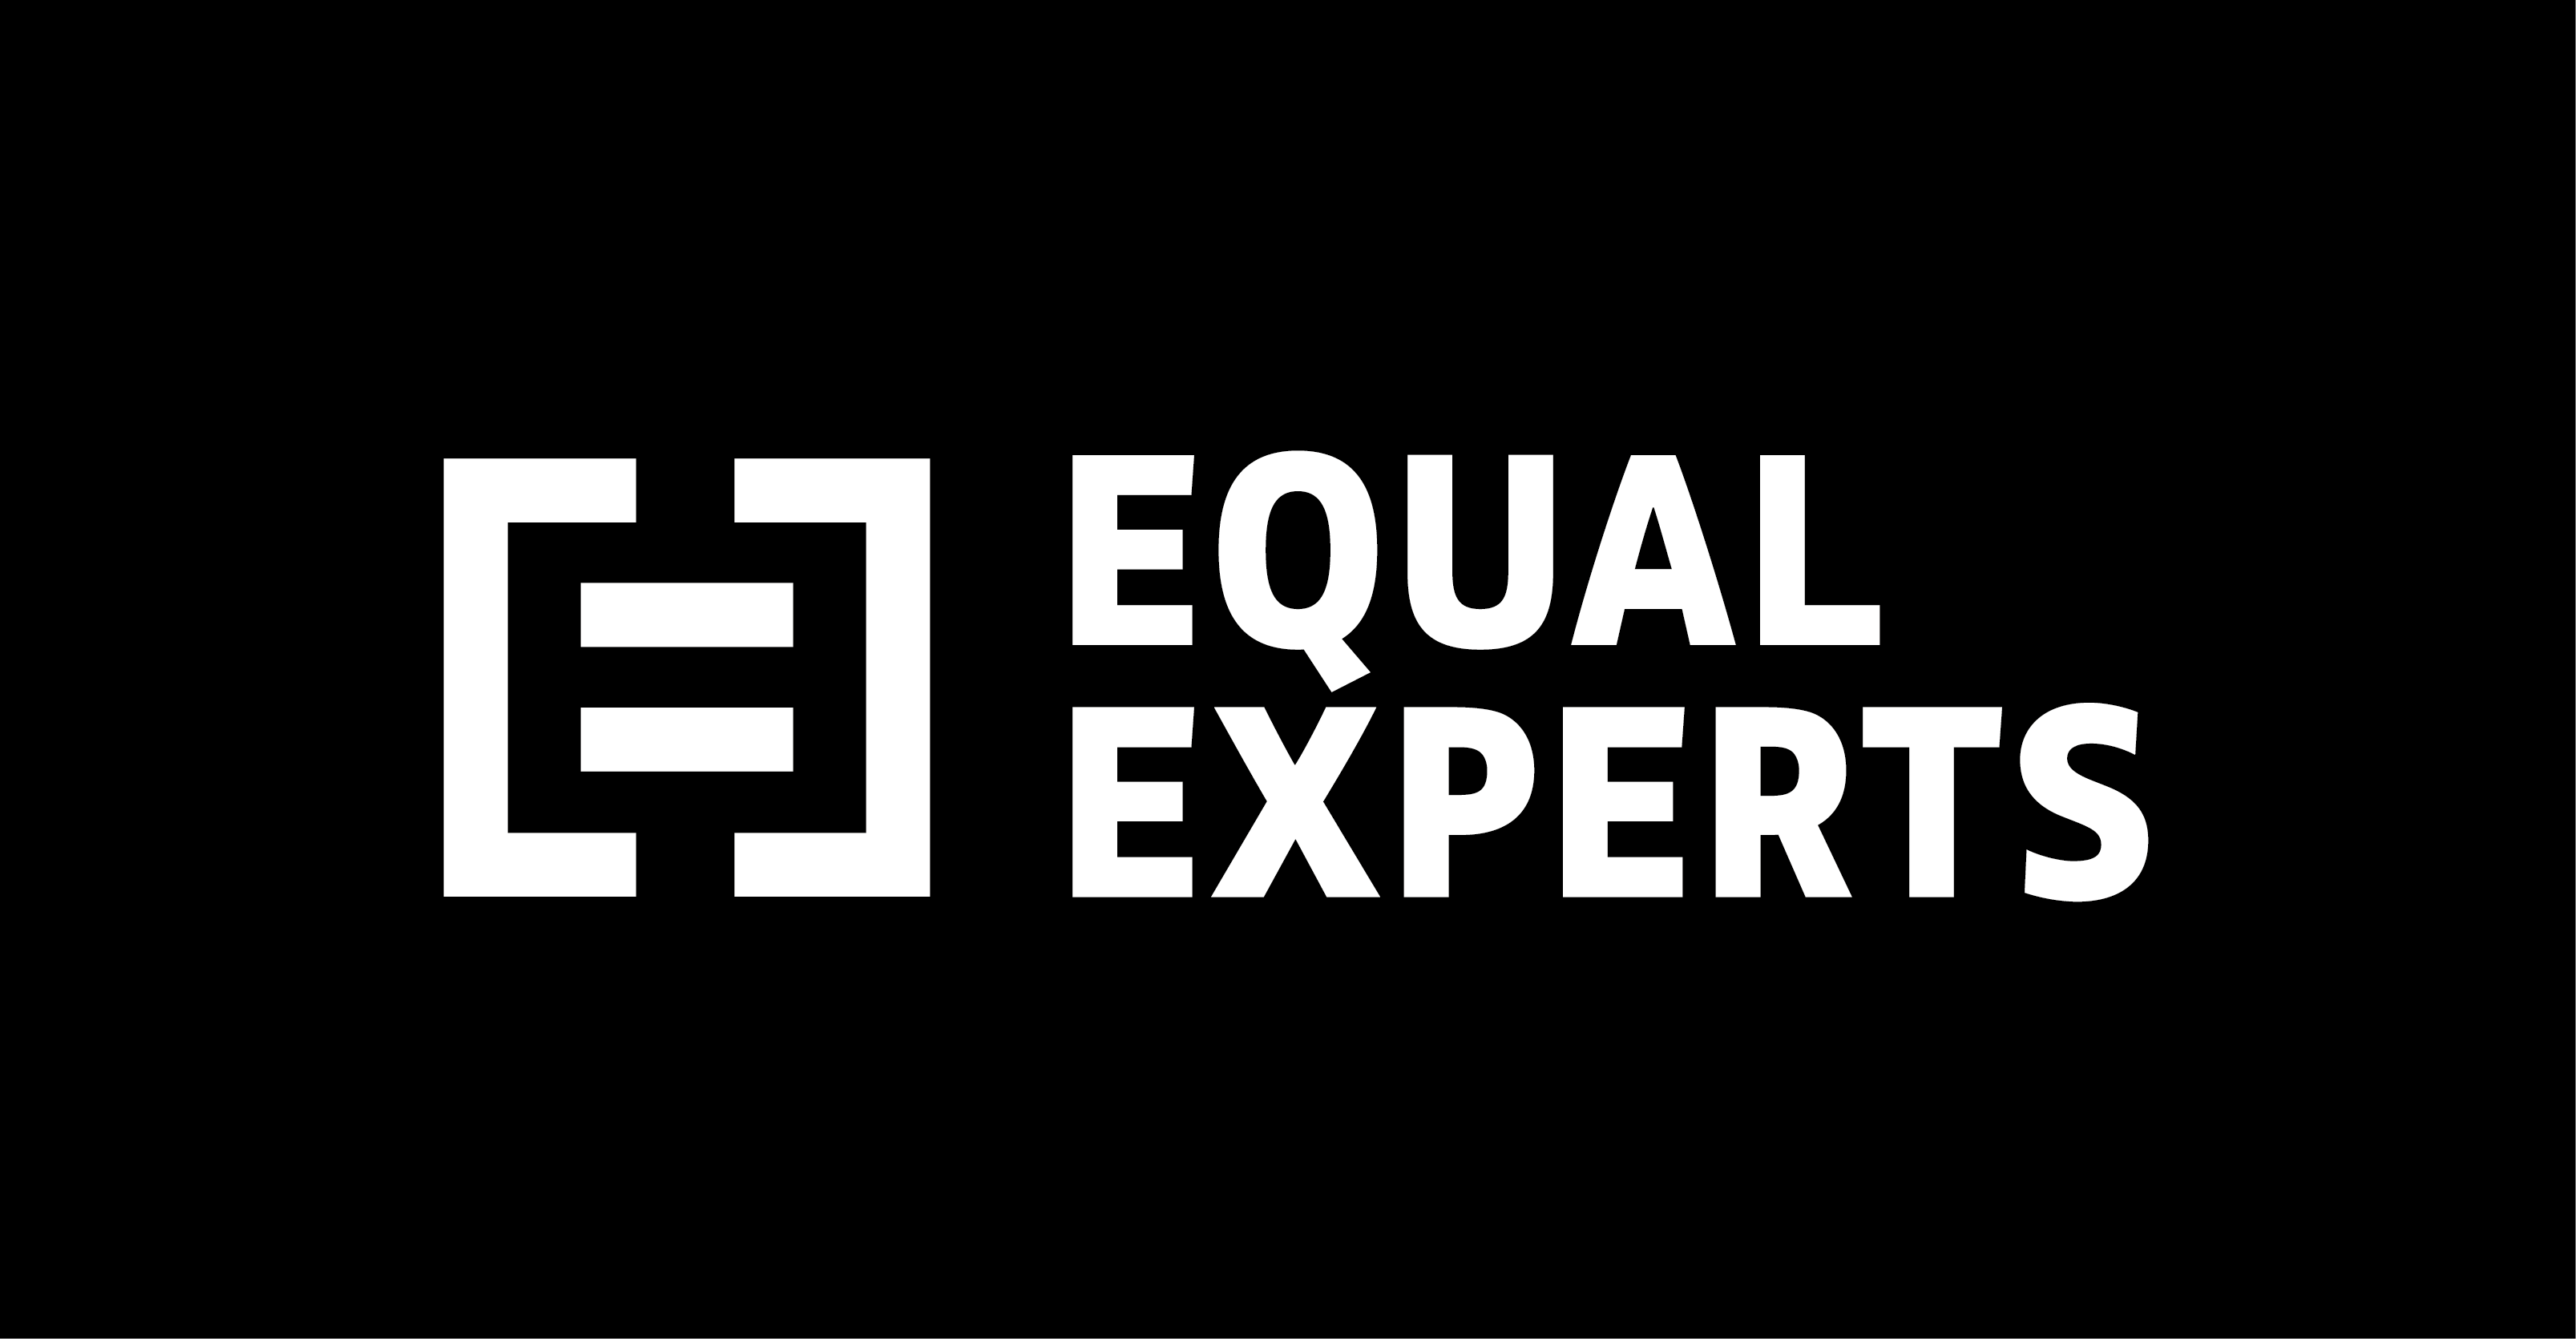 Equal Experts monotone white